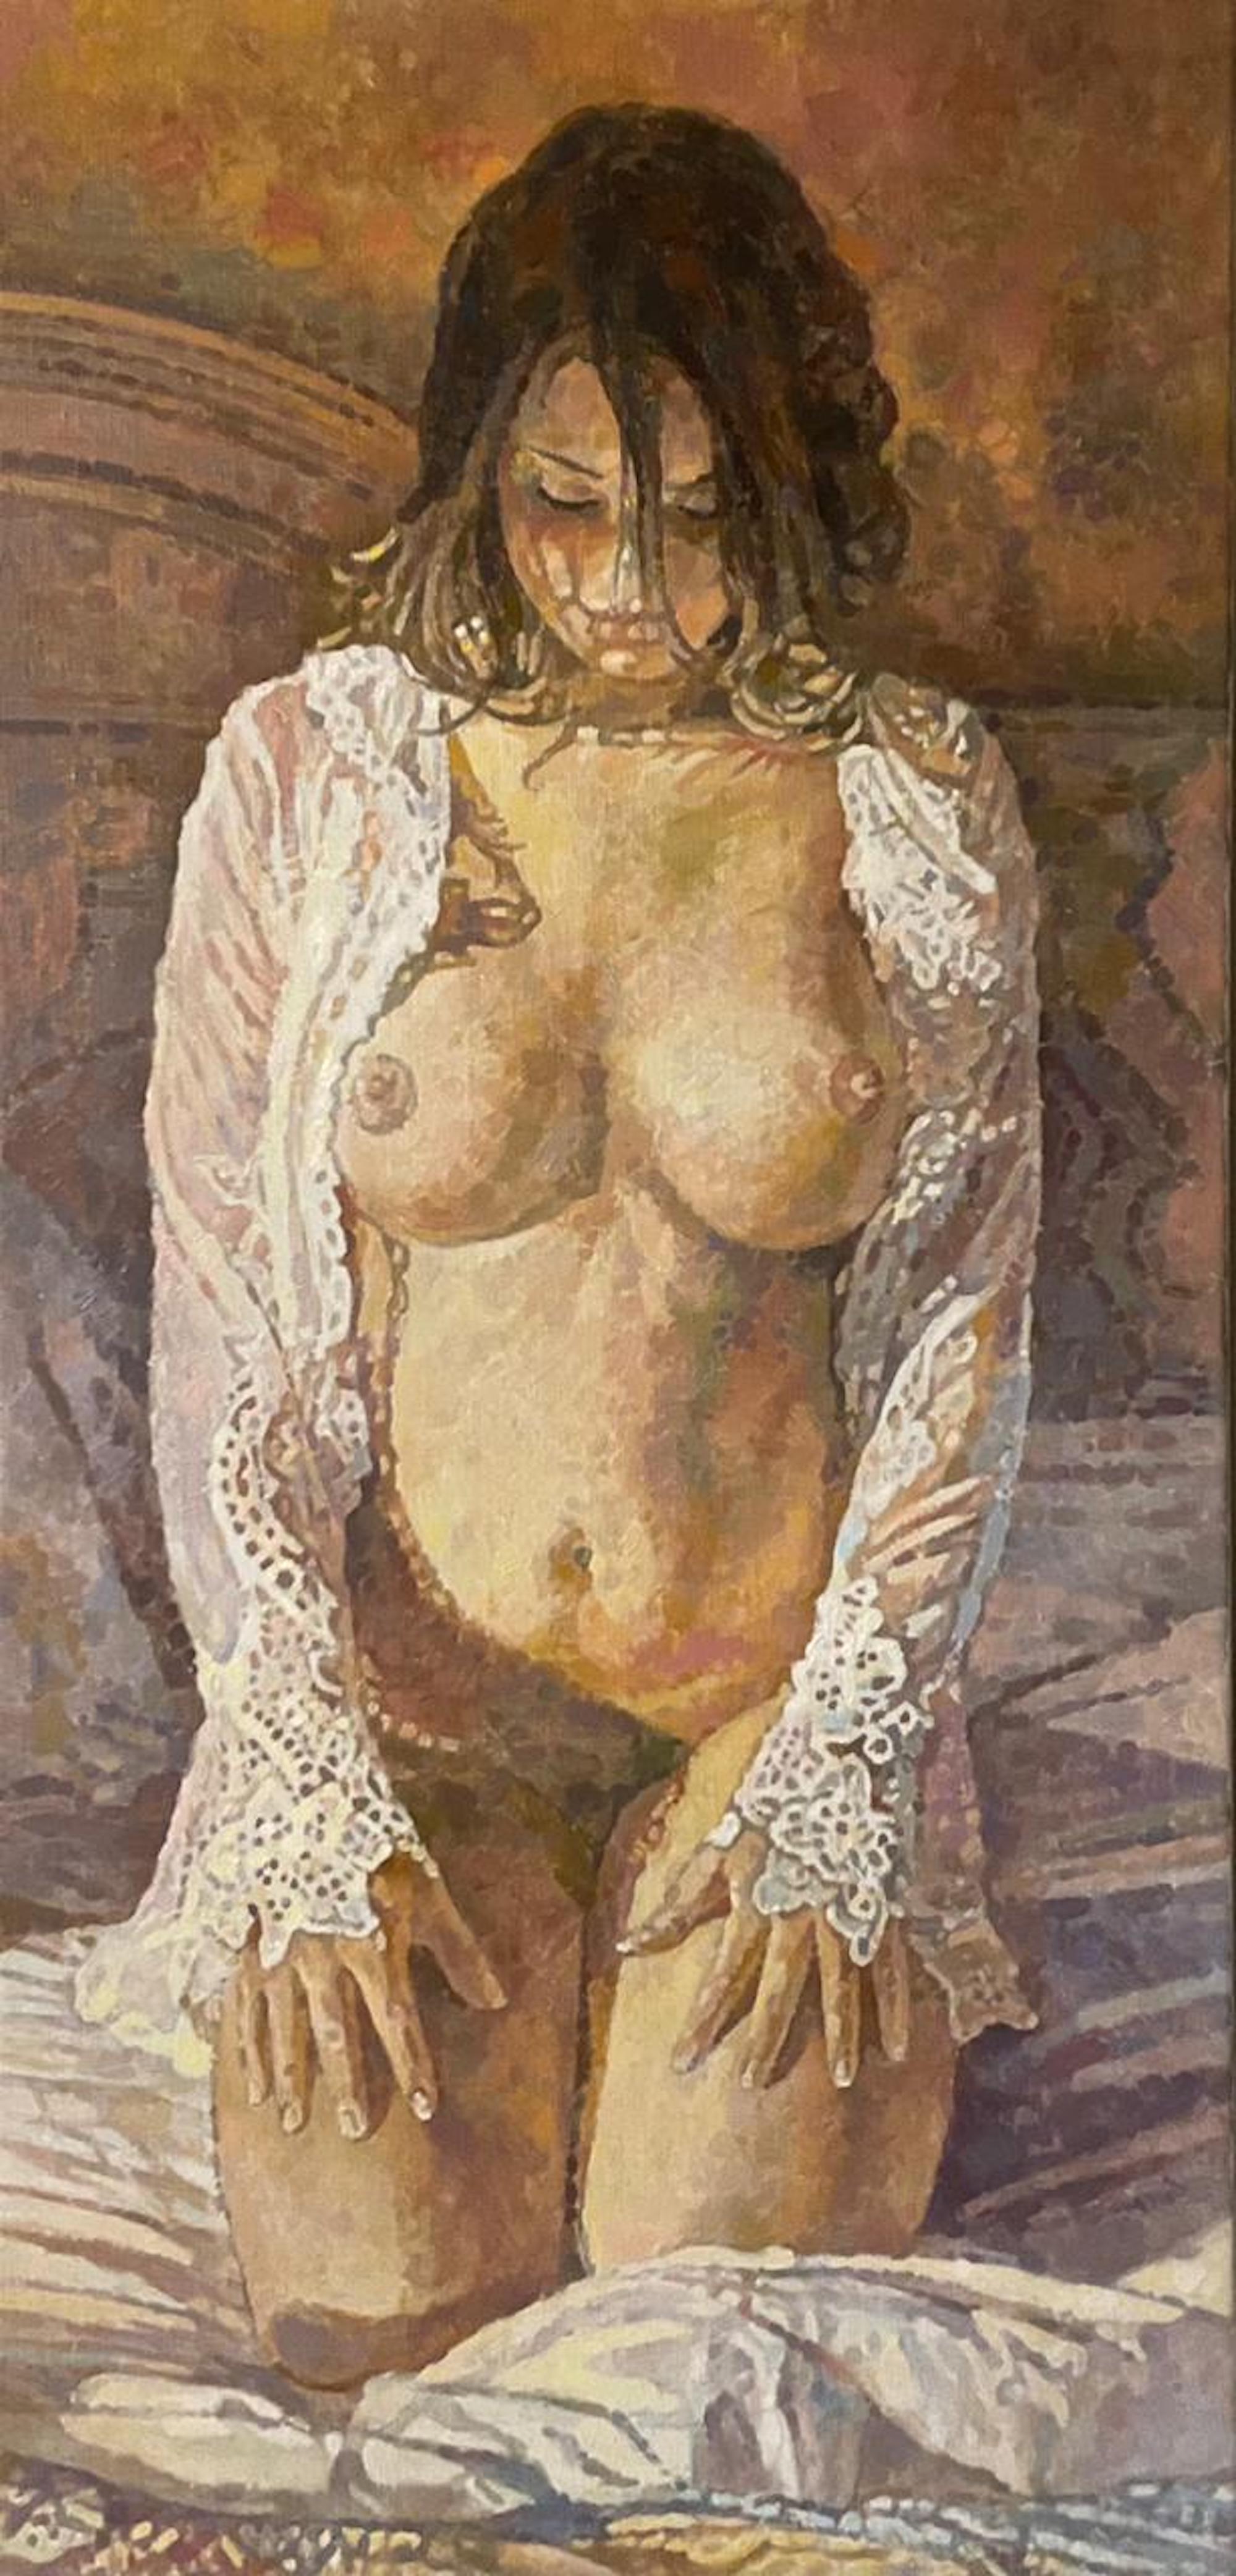 Ashot Muradyan Nude Painting - Nude Woman, Original Oil Painting, Handmade Artwork, One of a Kind